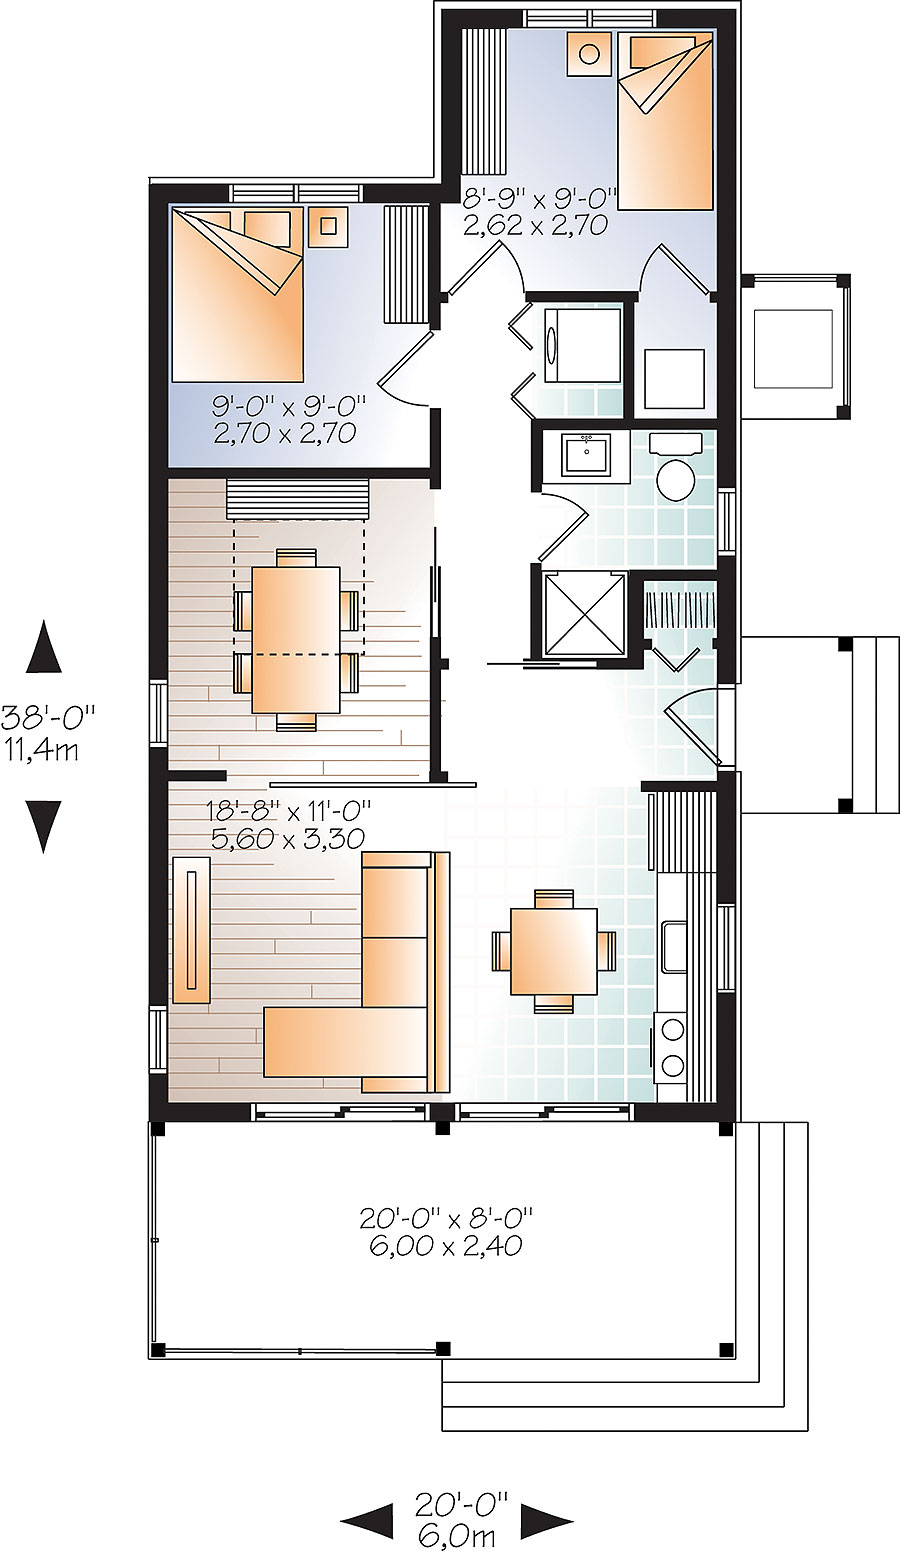 2 Bedrm 700  Sq  Ft  Cottage House  Plan  126 1855